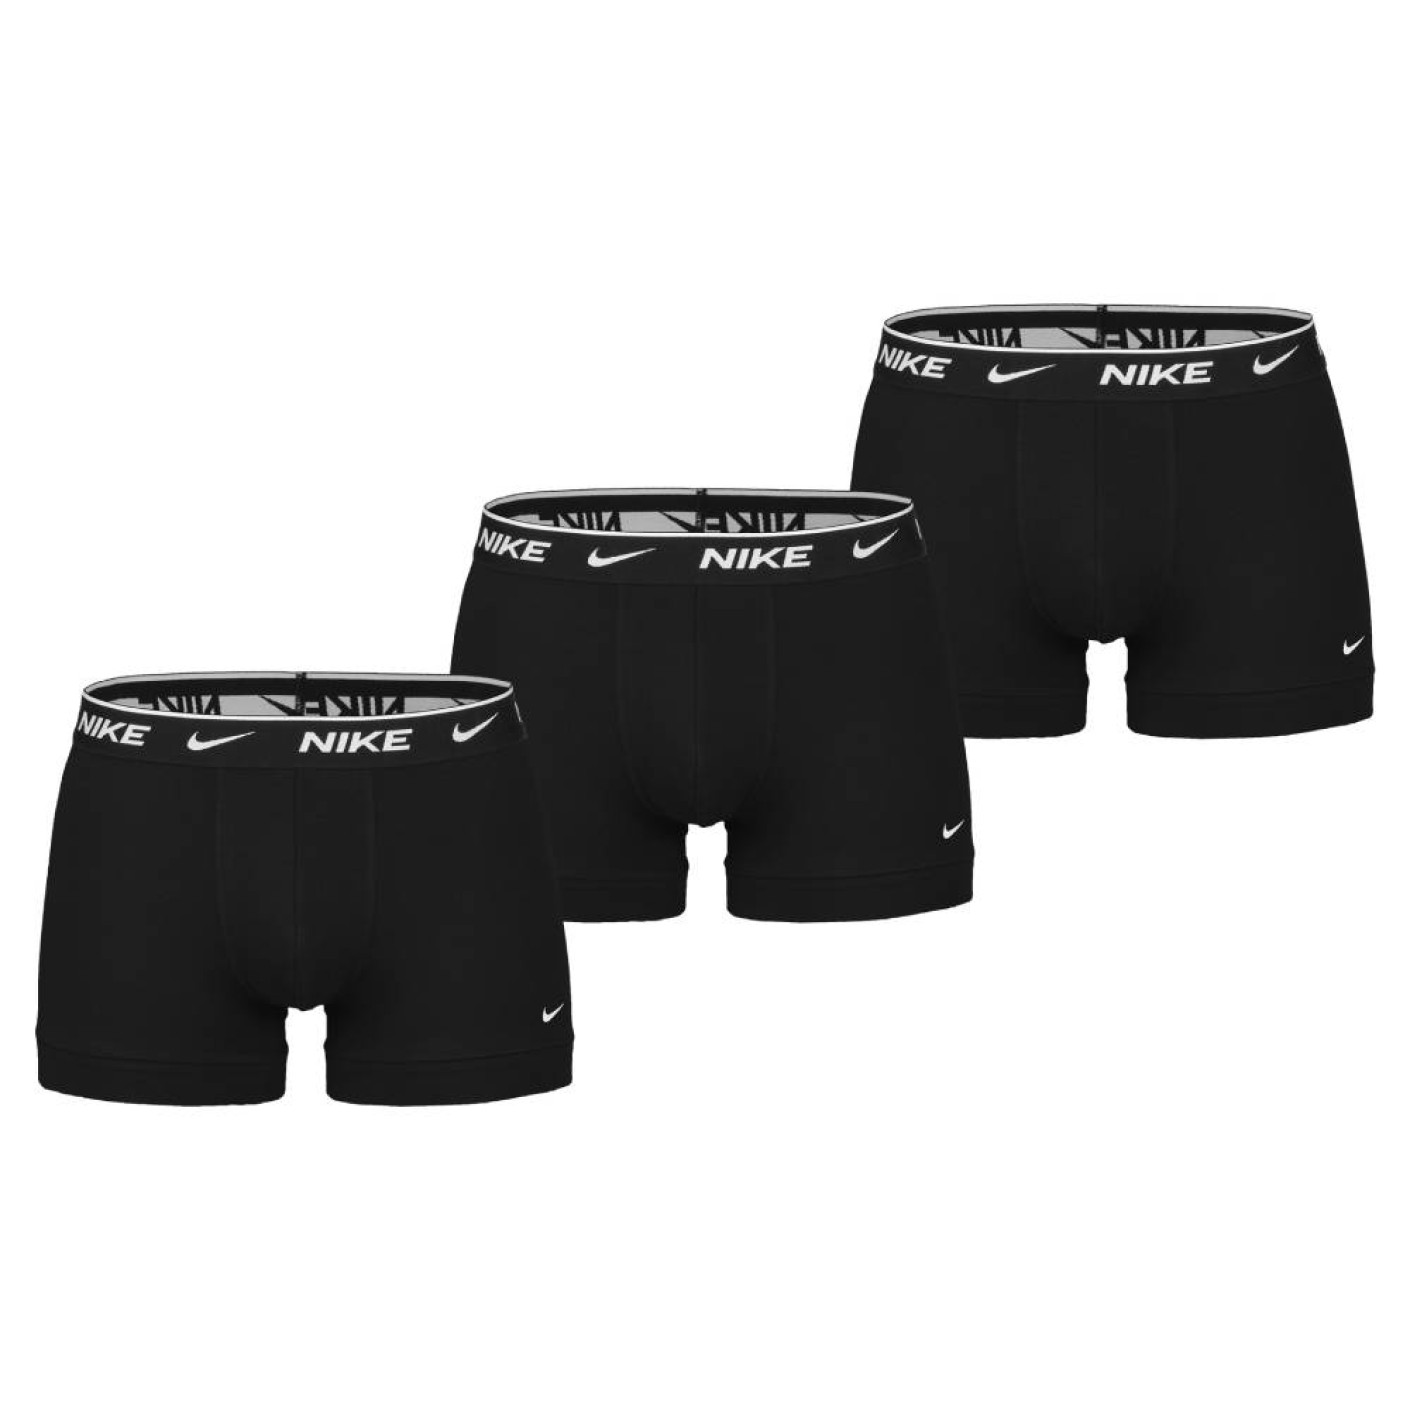 Nike Everyday Cotton Boxer Shorts Trunk 3-Pack Black